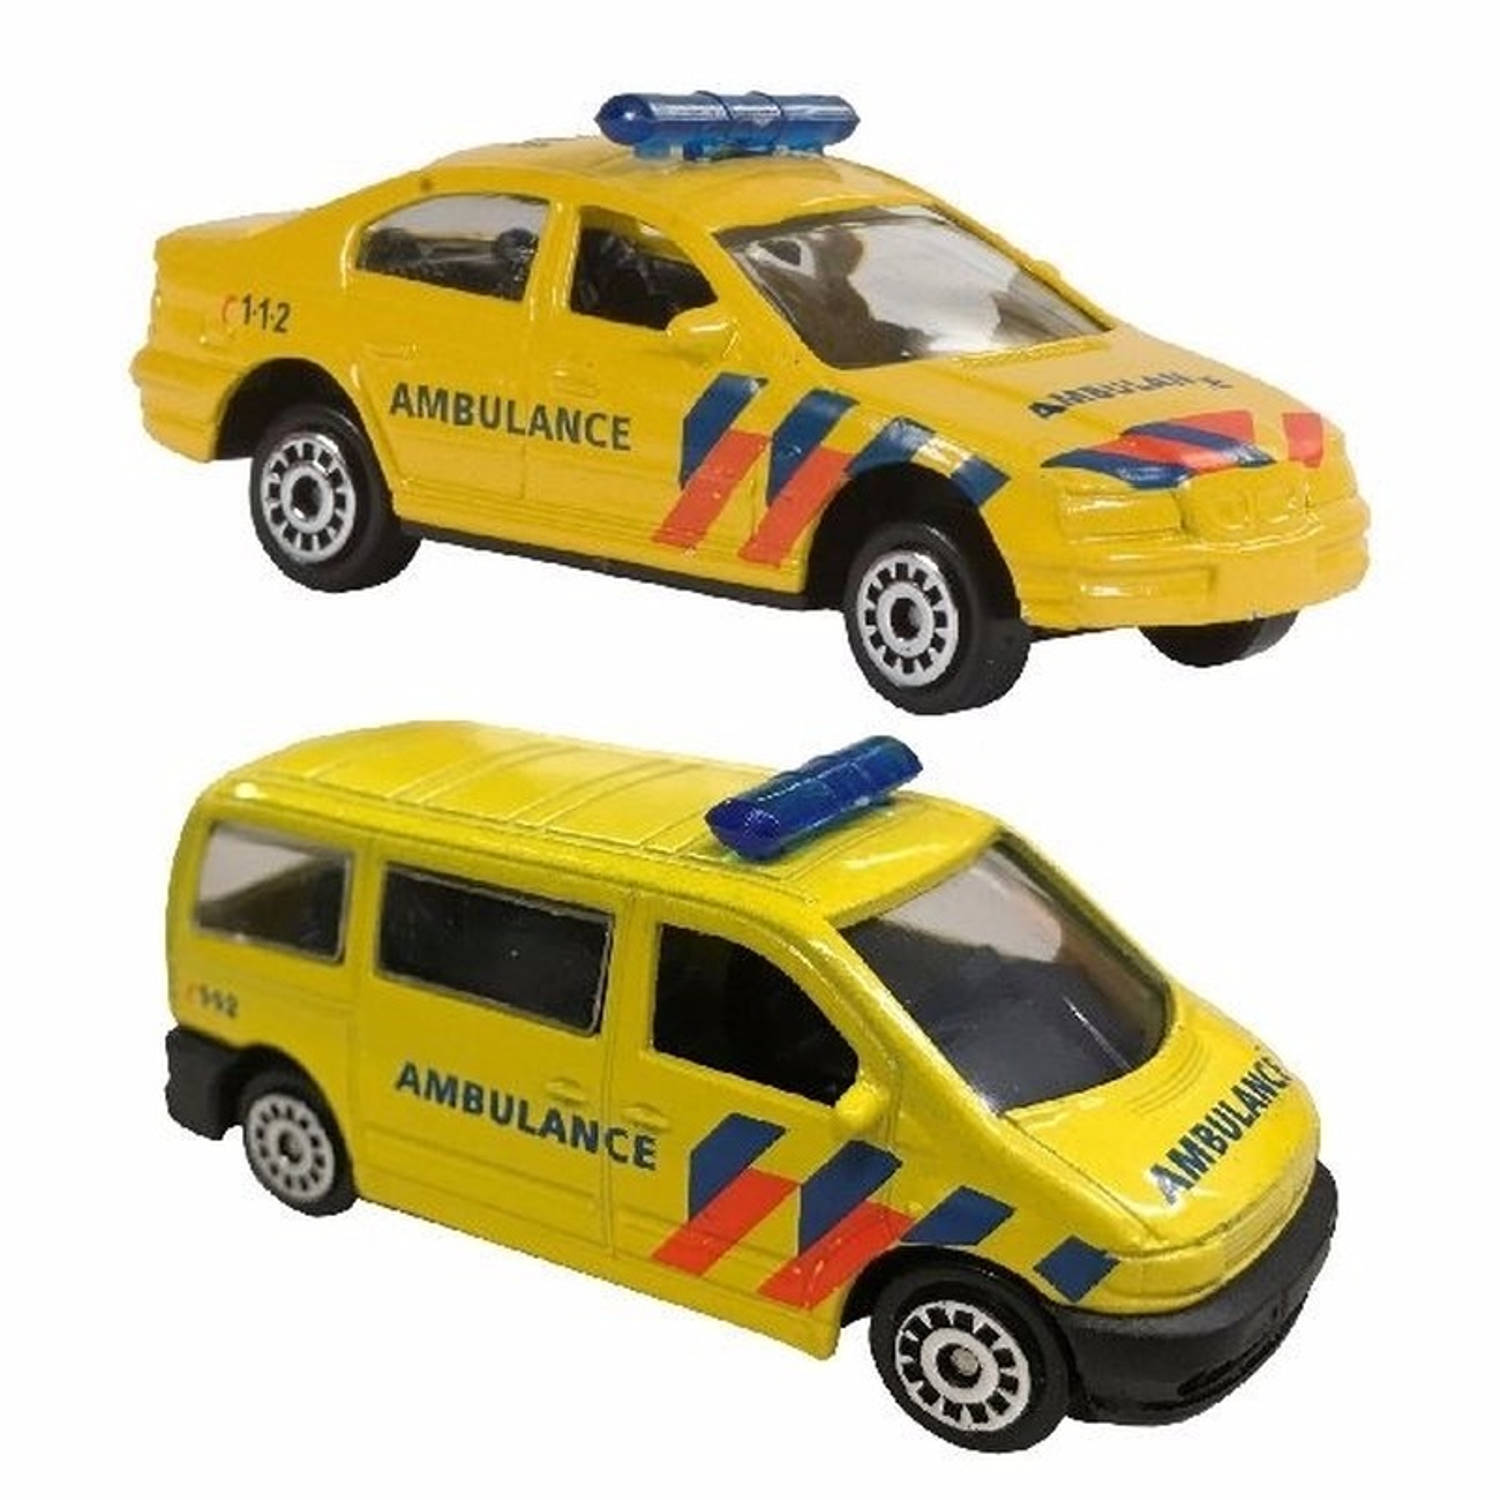 luisteraar Vierde ik ben trots Nederlandse ambulance speelgoed modelauto set 2-dlg | Blokker